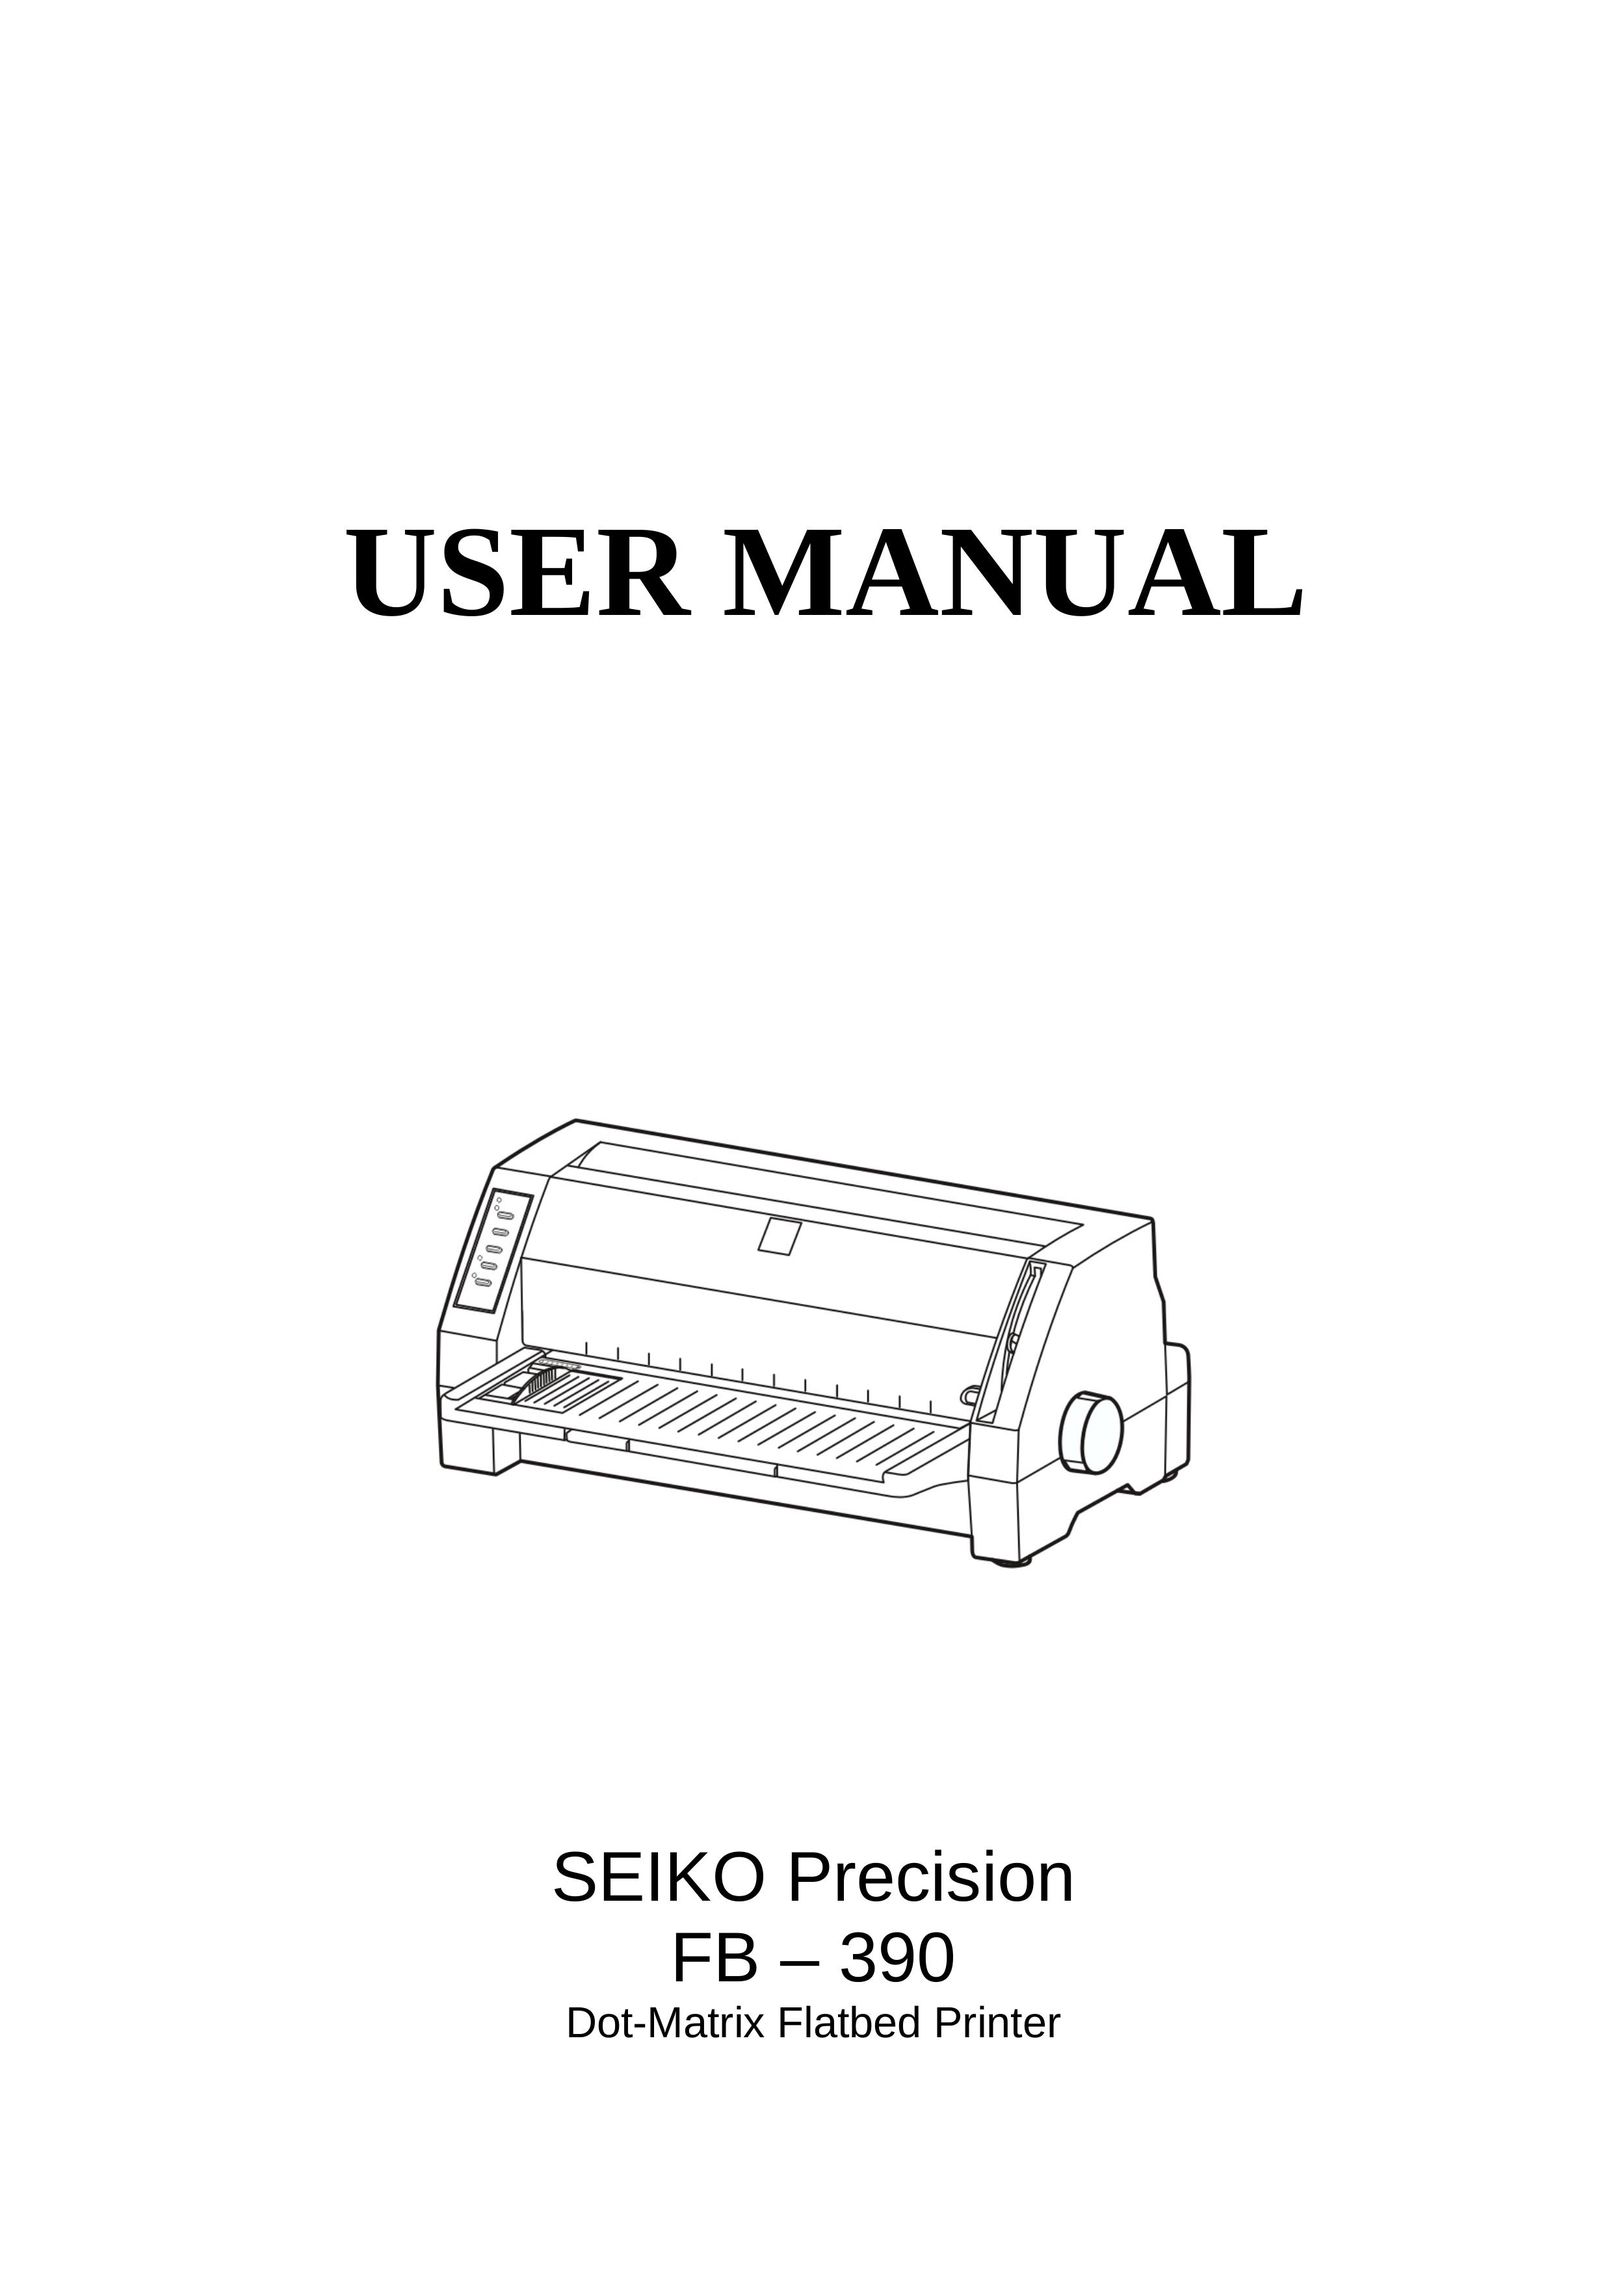 Seiko FB 390 Printer User Manual